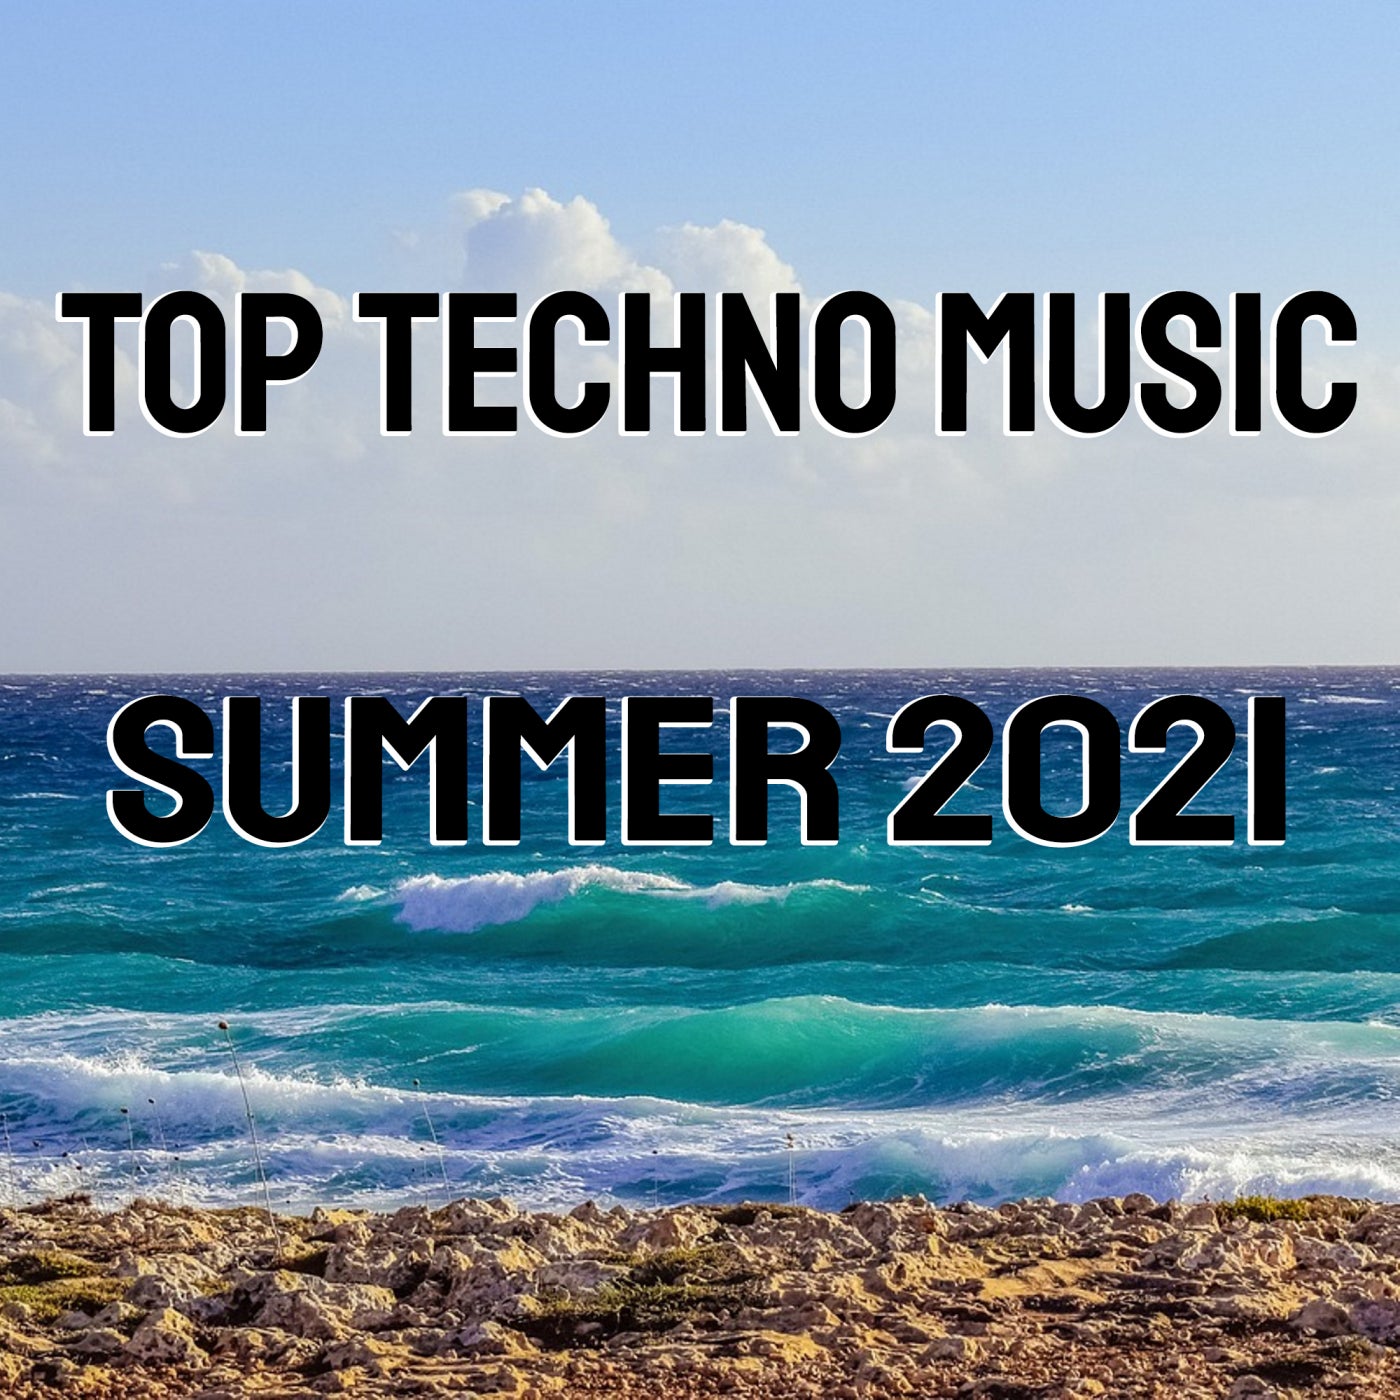 Top Techno Music Summer 2021